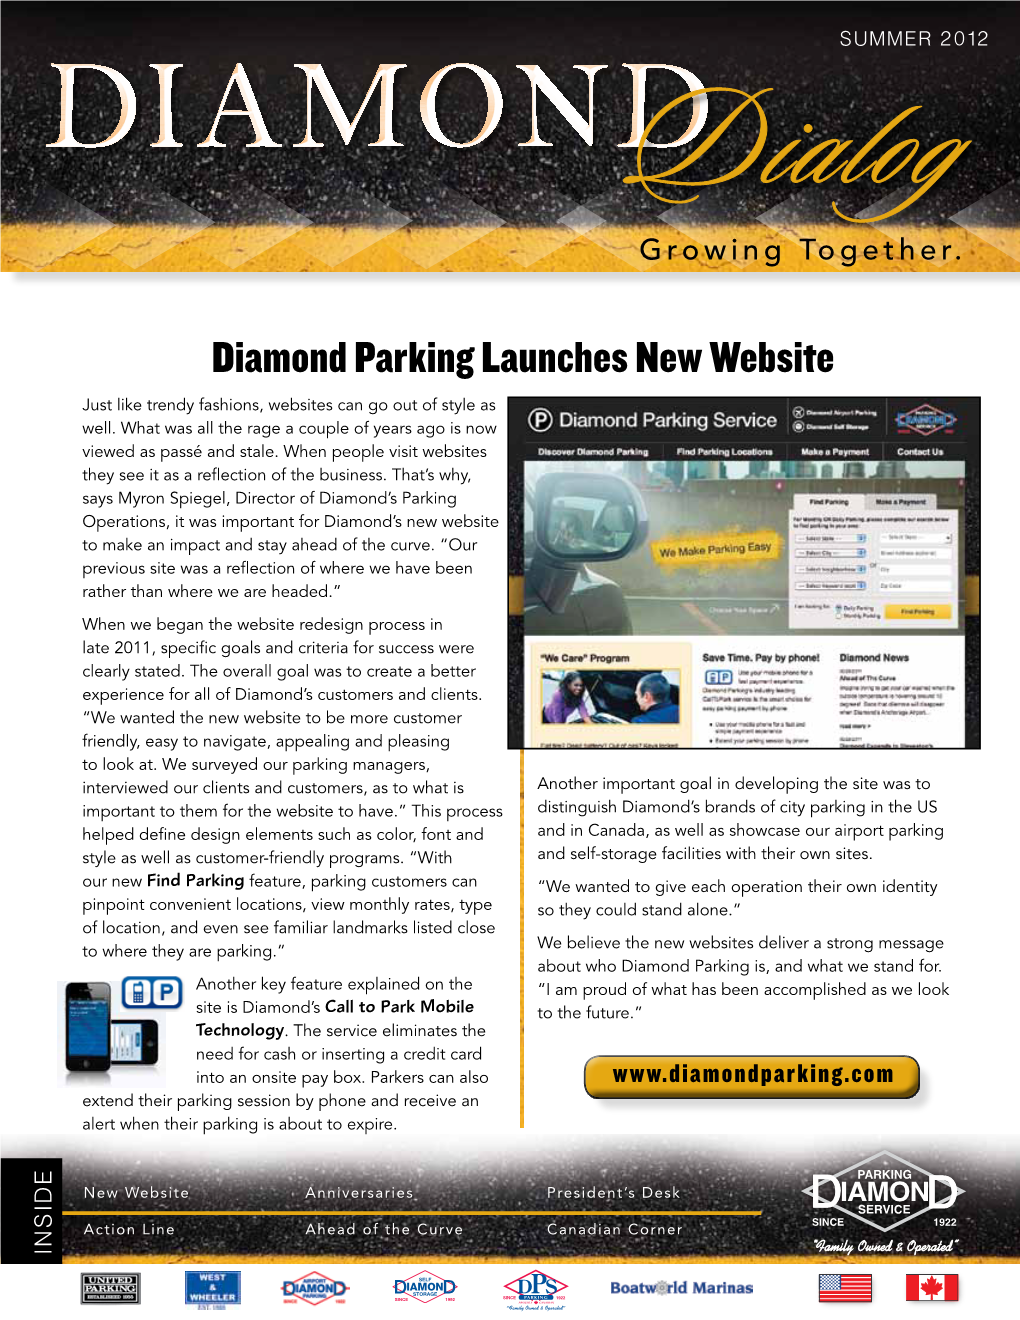 Diamond Parking Summer 2012